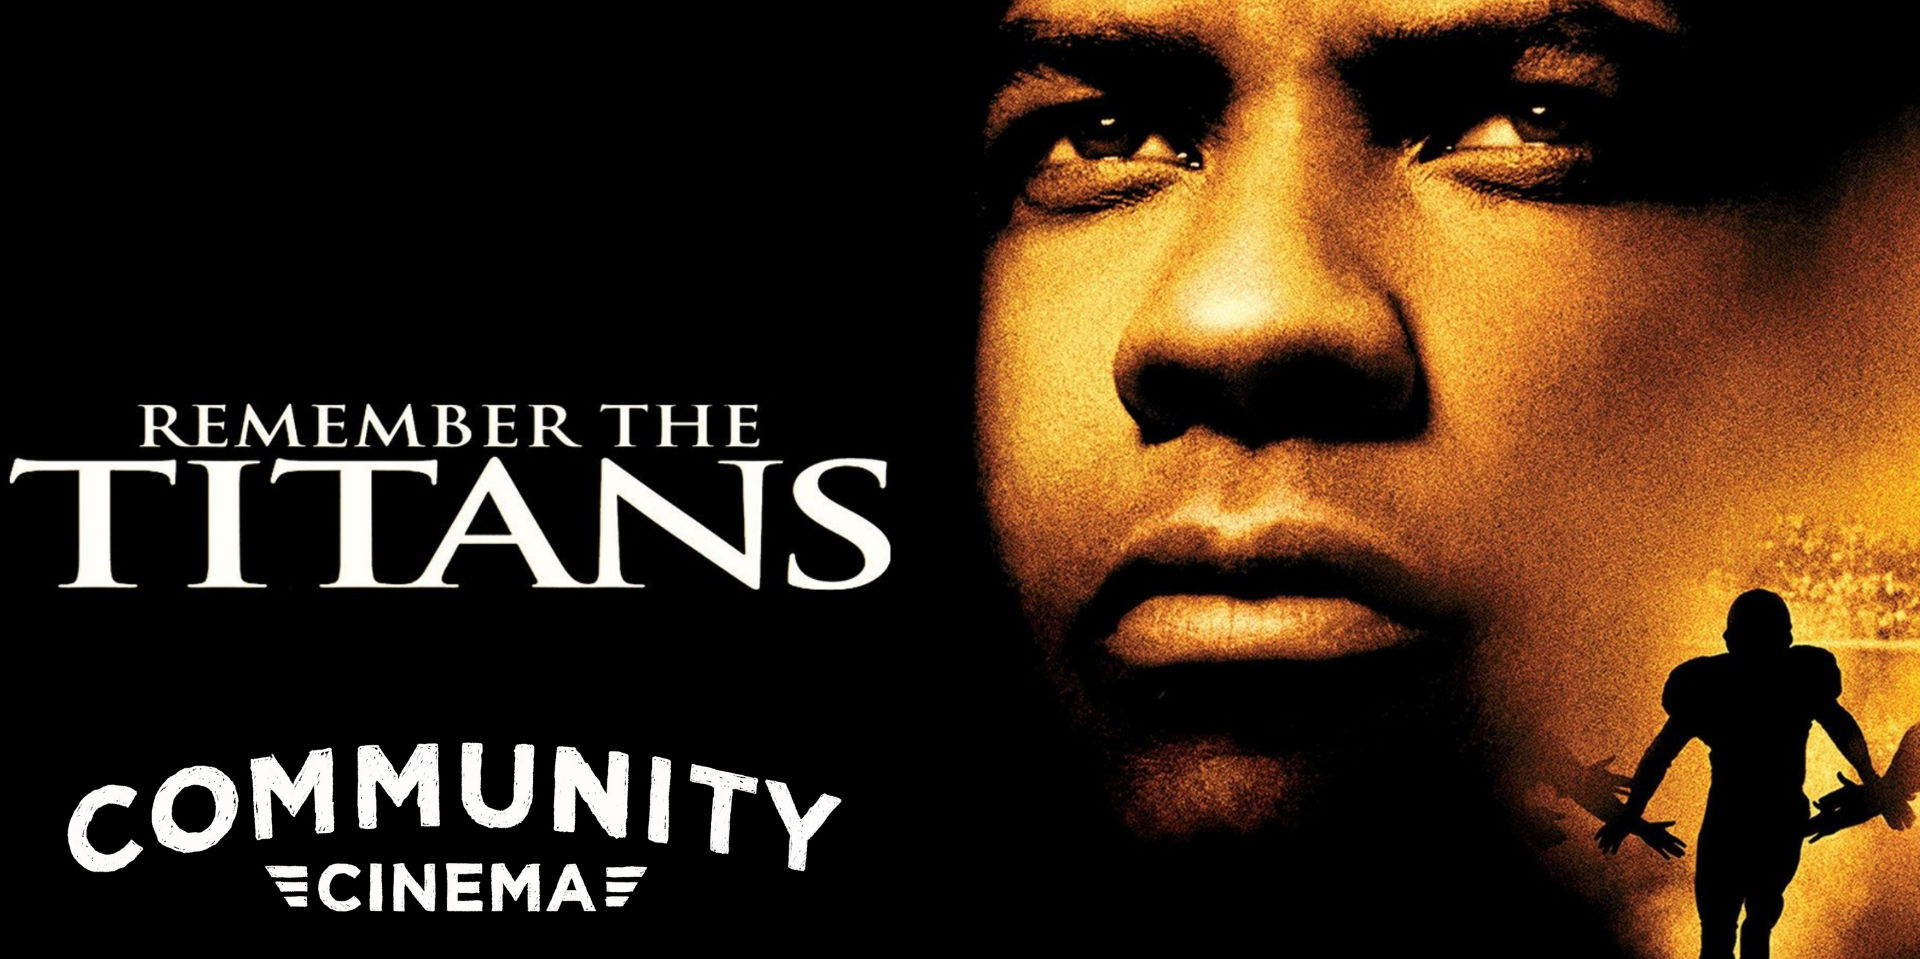 Remember The Titans (2000) - Community Cinema & Amphitheater promotional image